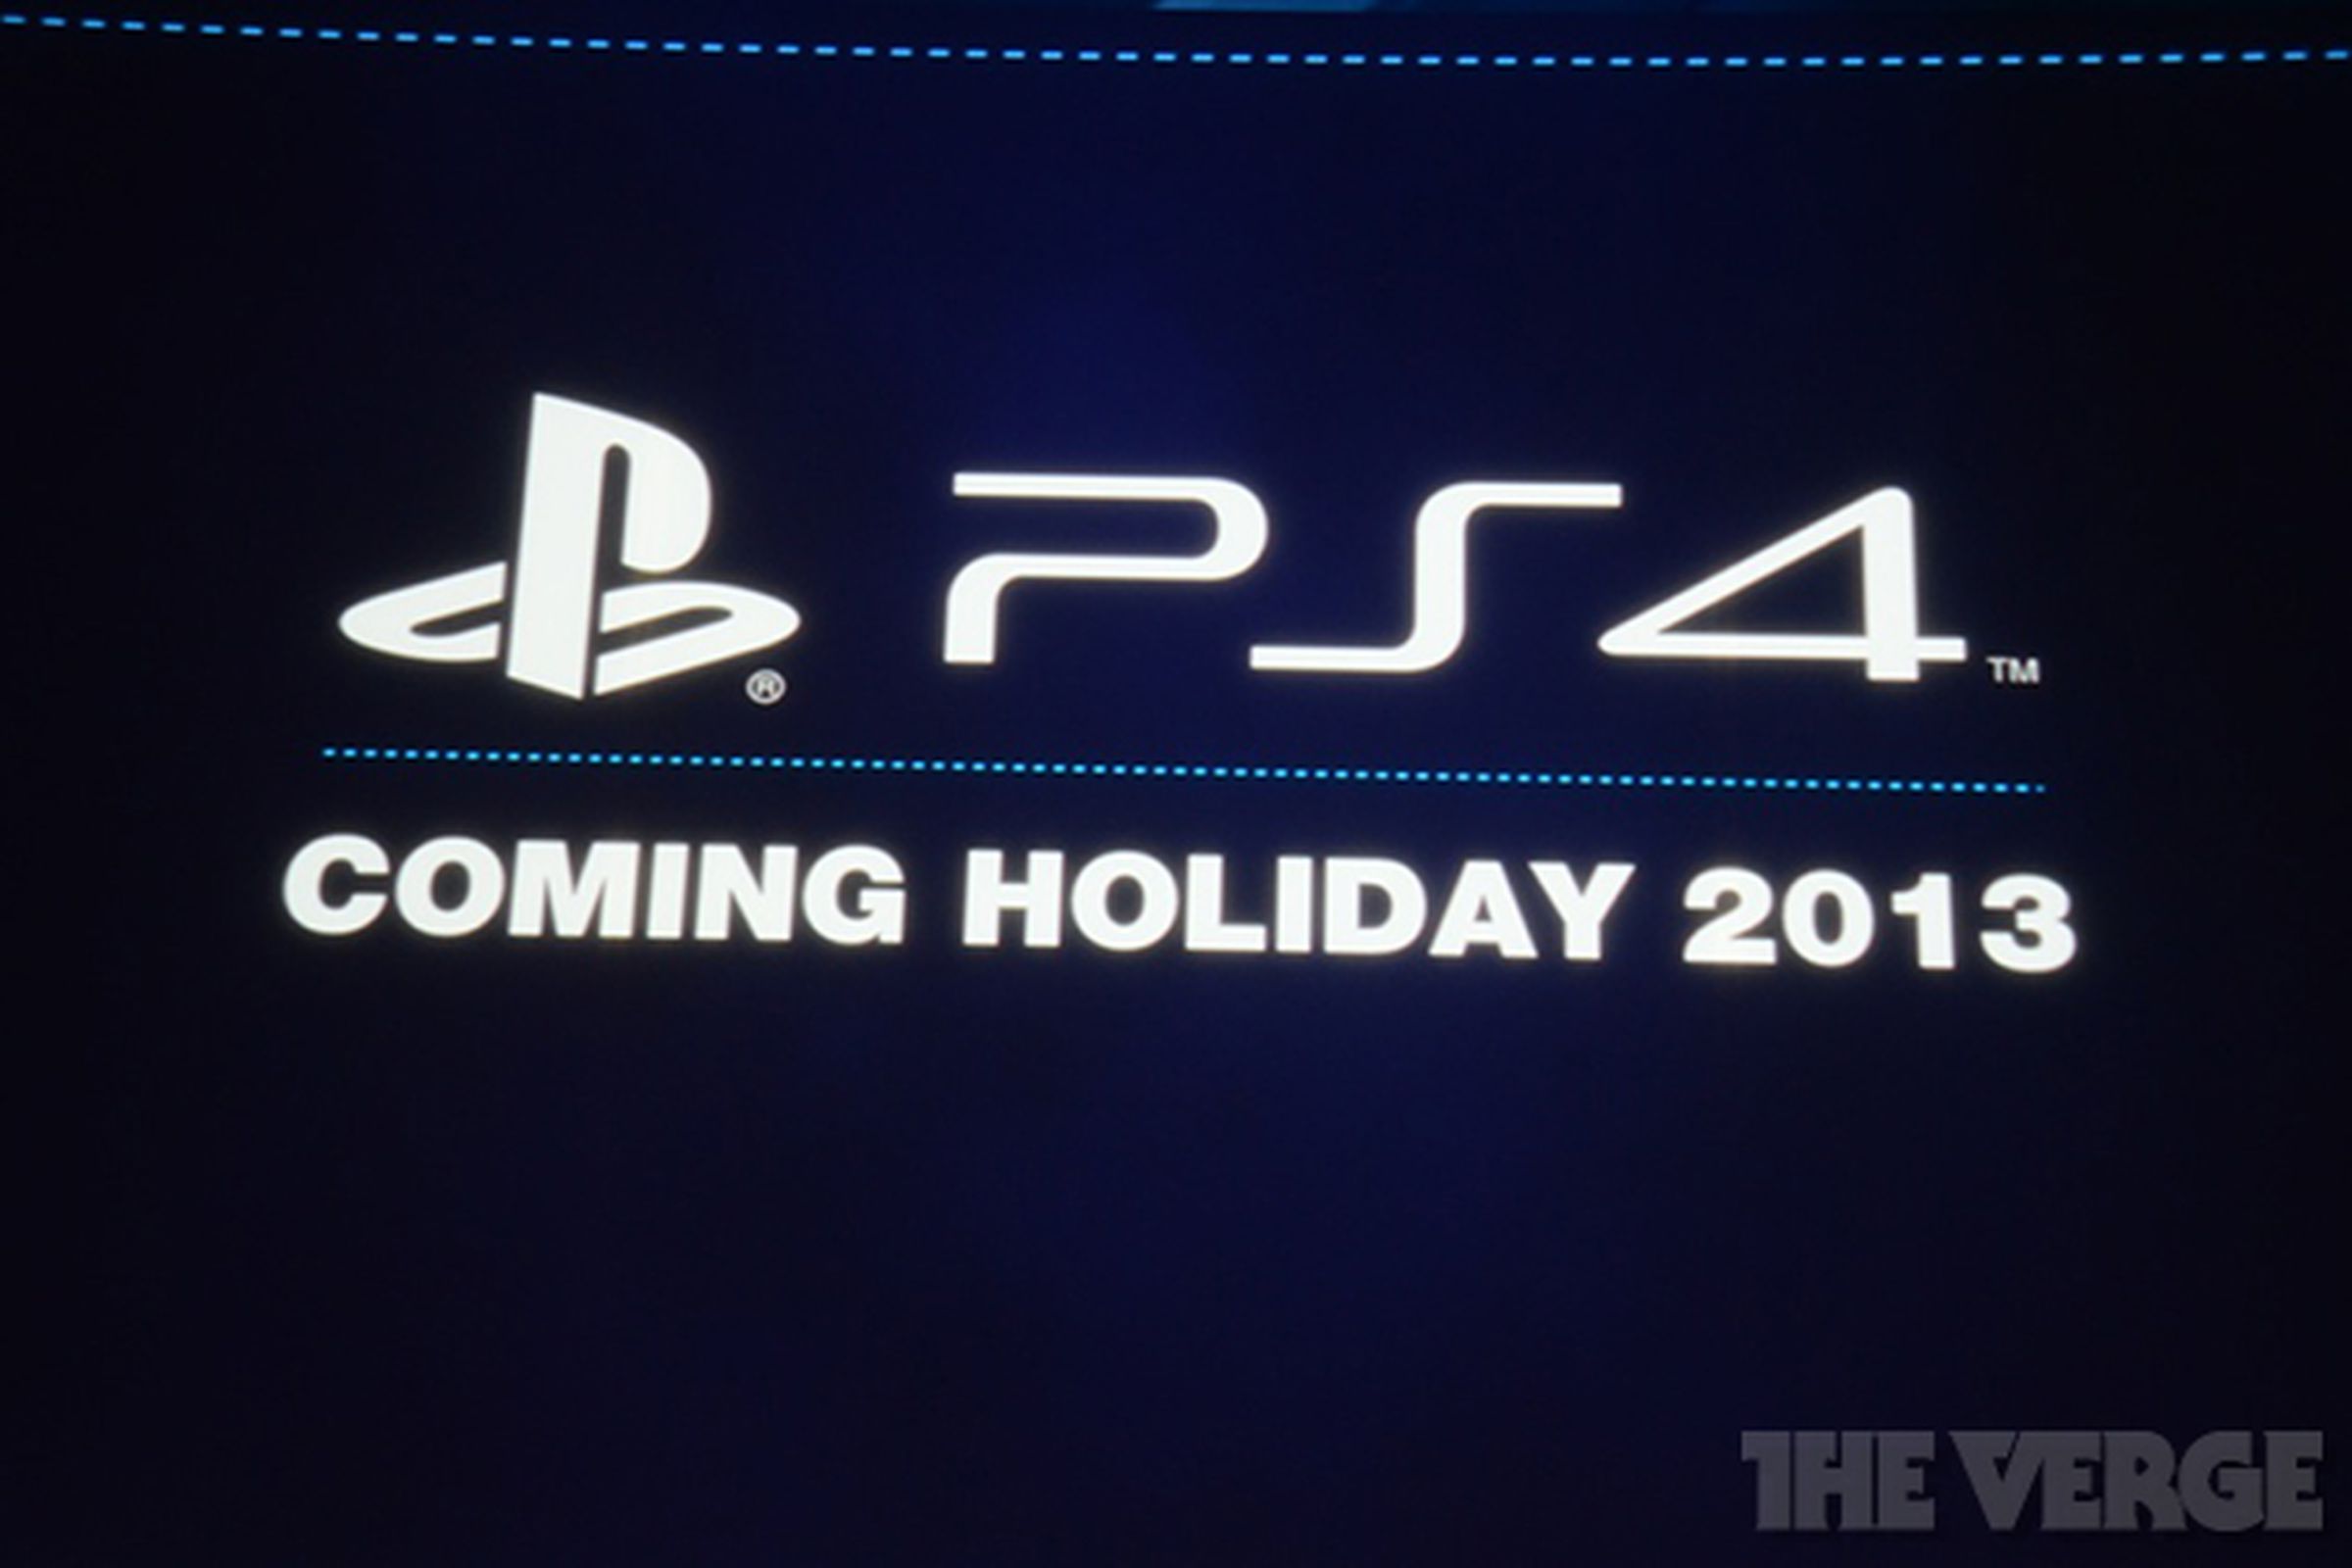 PS4 Holiday 2013